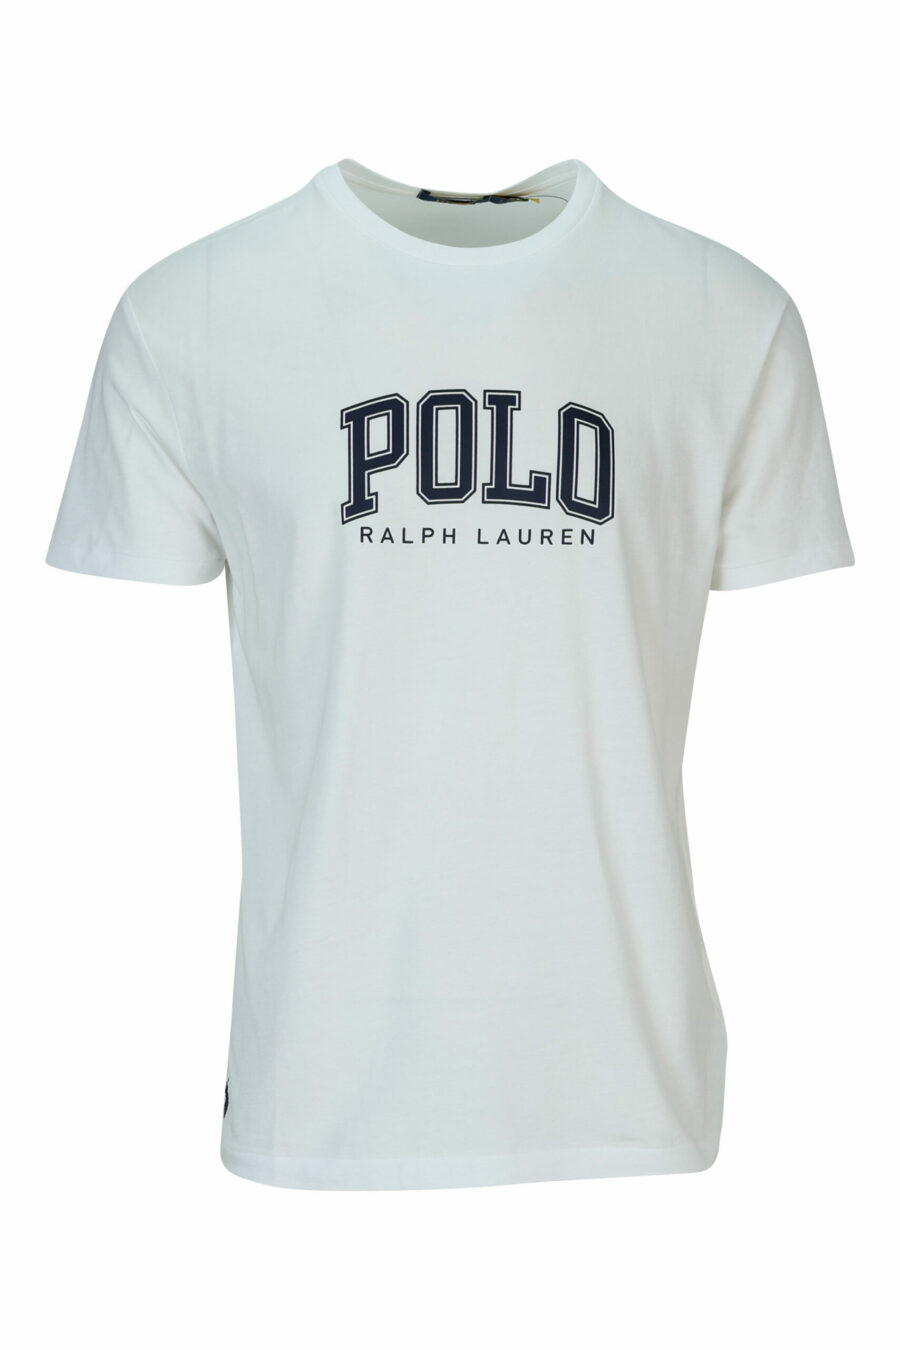 Camiseta blanca con maxilogo "polo" negro - 3616536391115 scaled